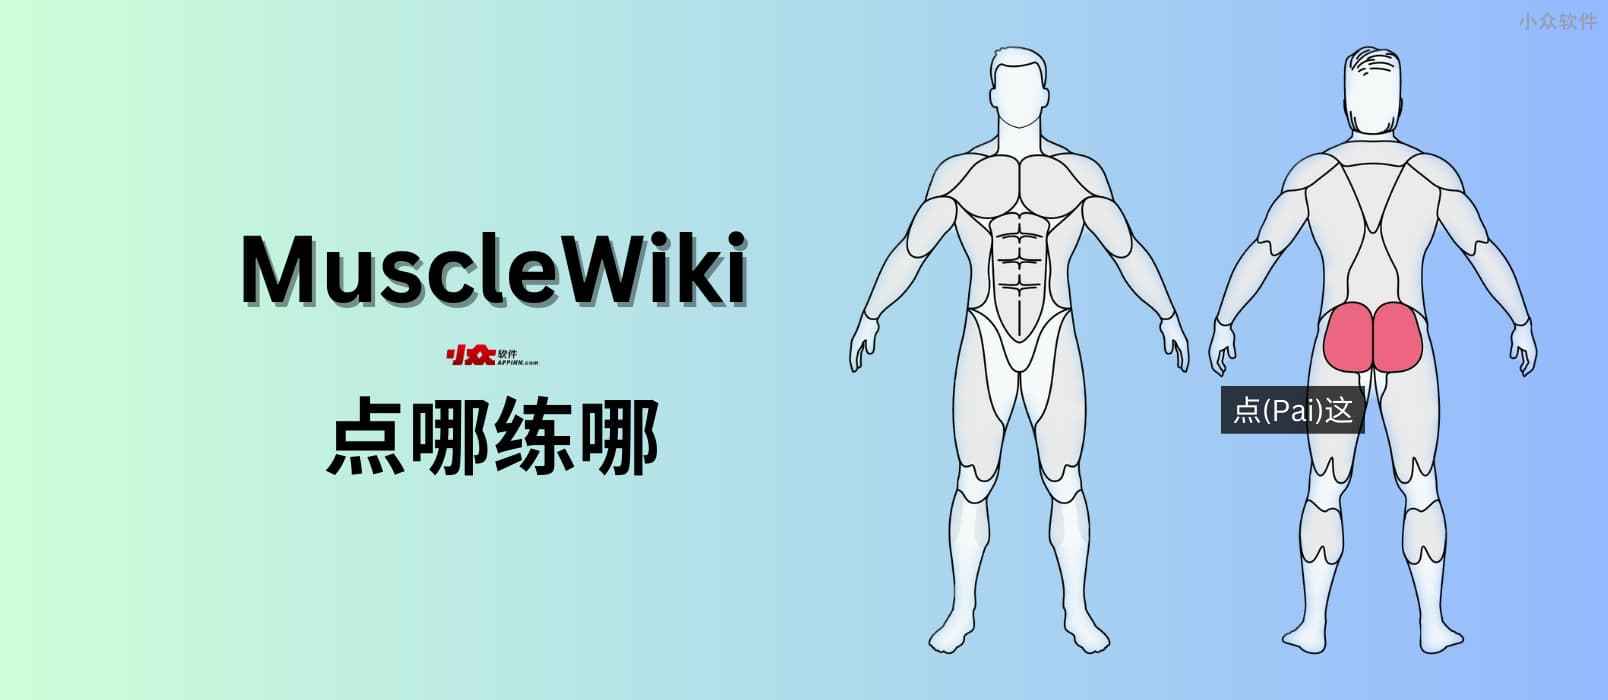 MuscleWiki - 点哪练哪，免费视频健身指南